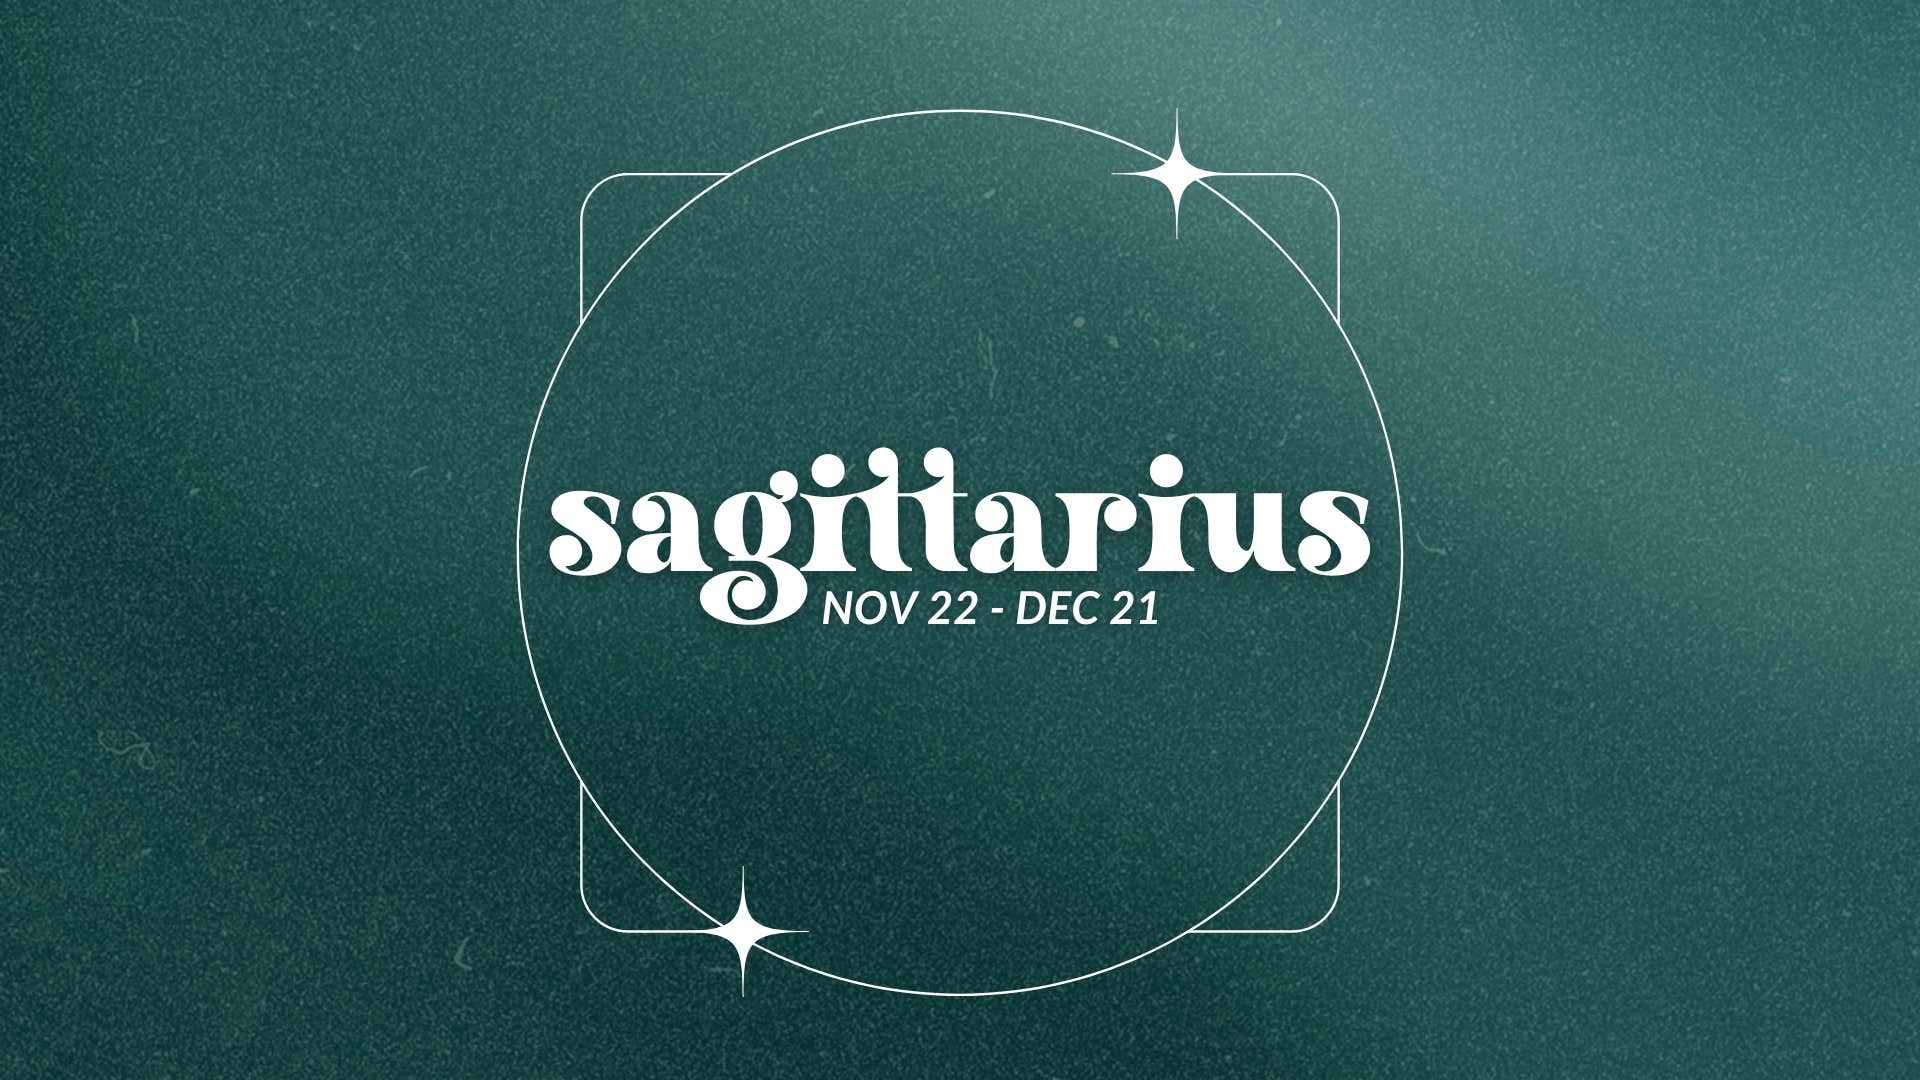 what puts sagittarius in a good mood